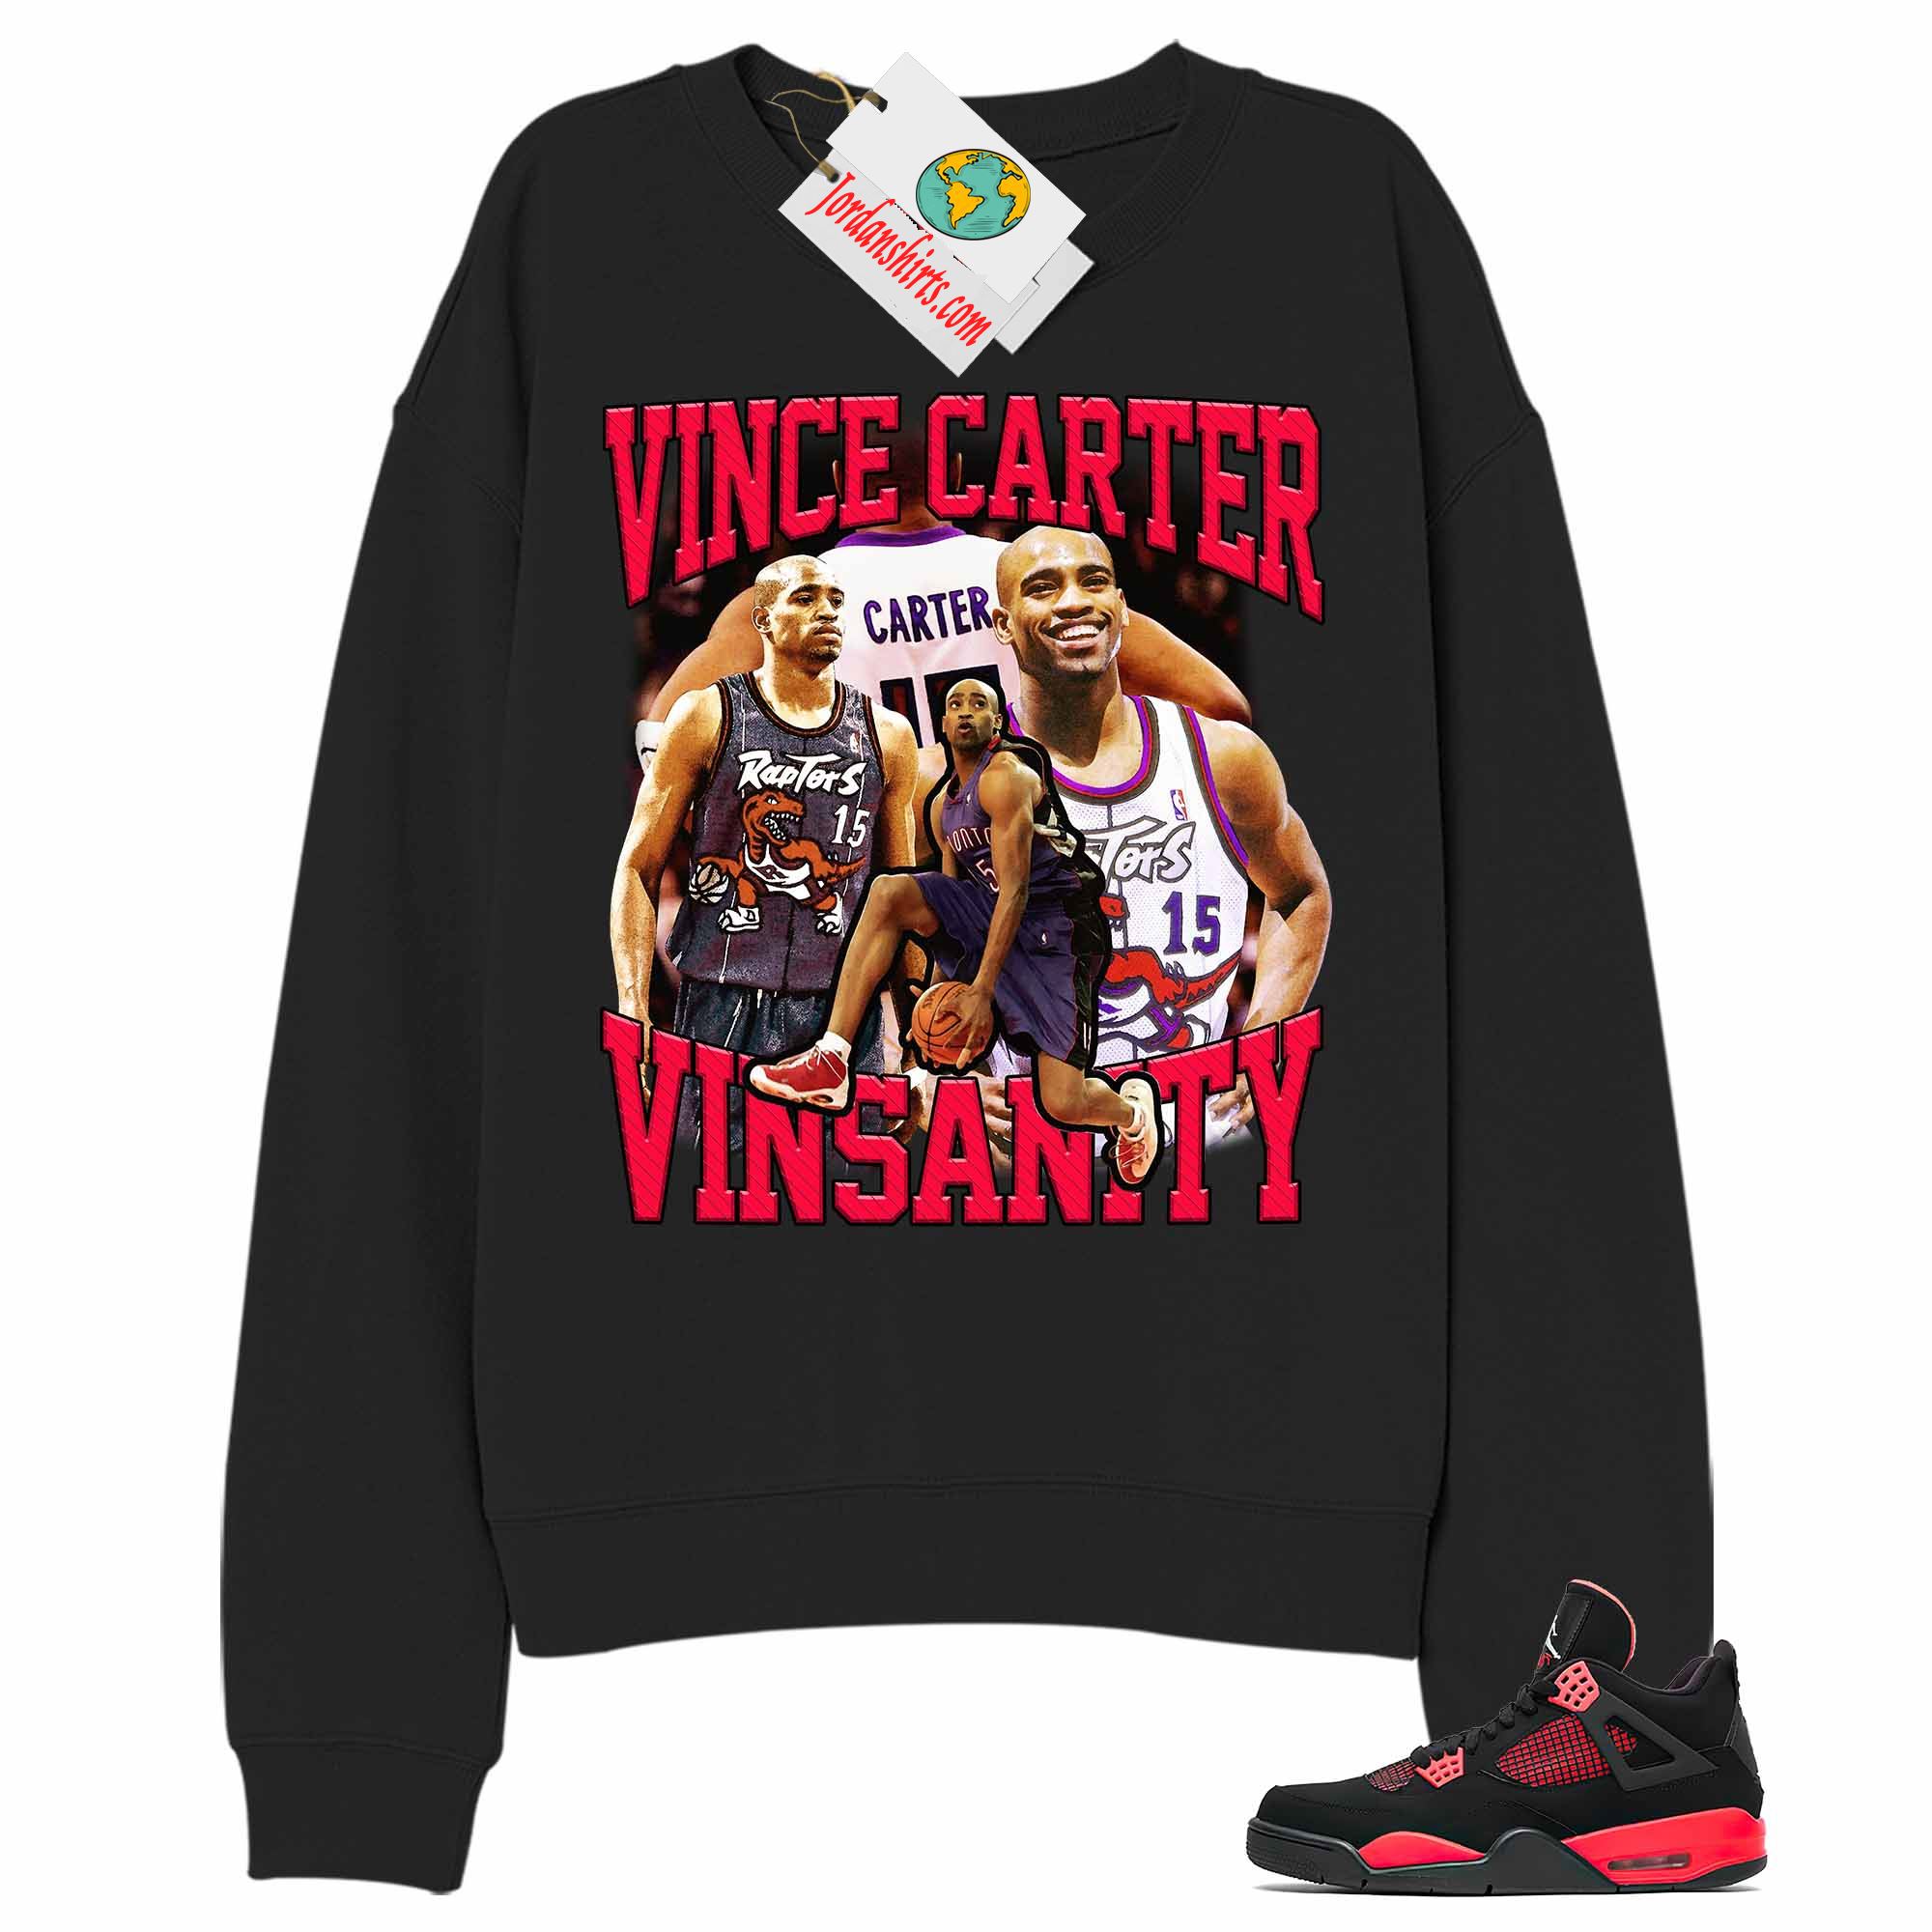 Jordan 4 Sweatshirt, Vince Carter Vinsanity Basketball 90s Retro Vintage Black Sweatshirt Air Jordan 4 Red Thunder 4s Plus Size Up To 5xl